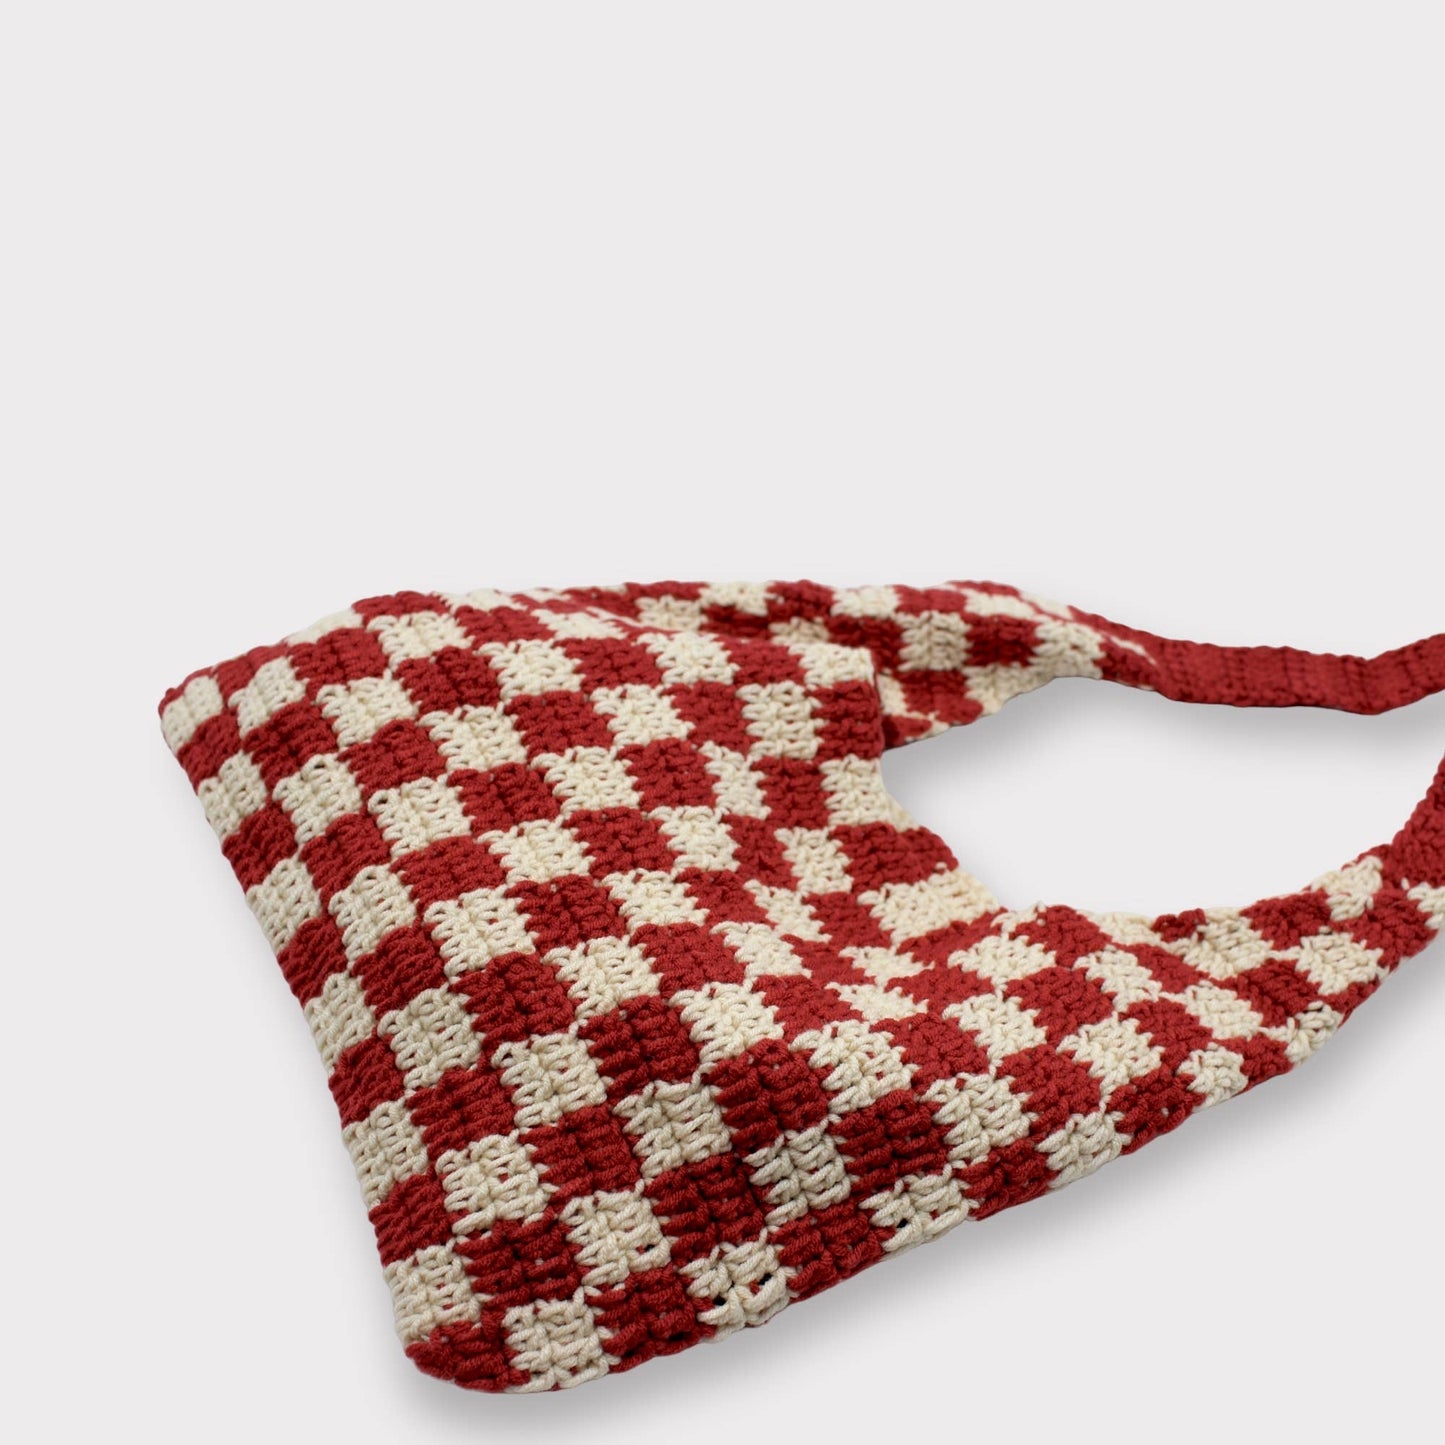 Checkered Crochet Bag